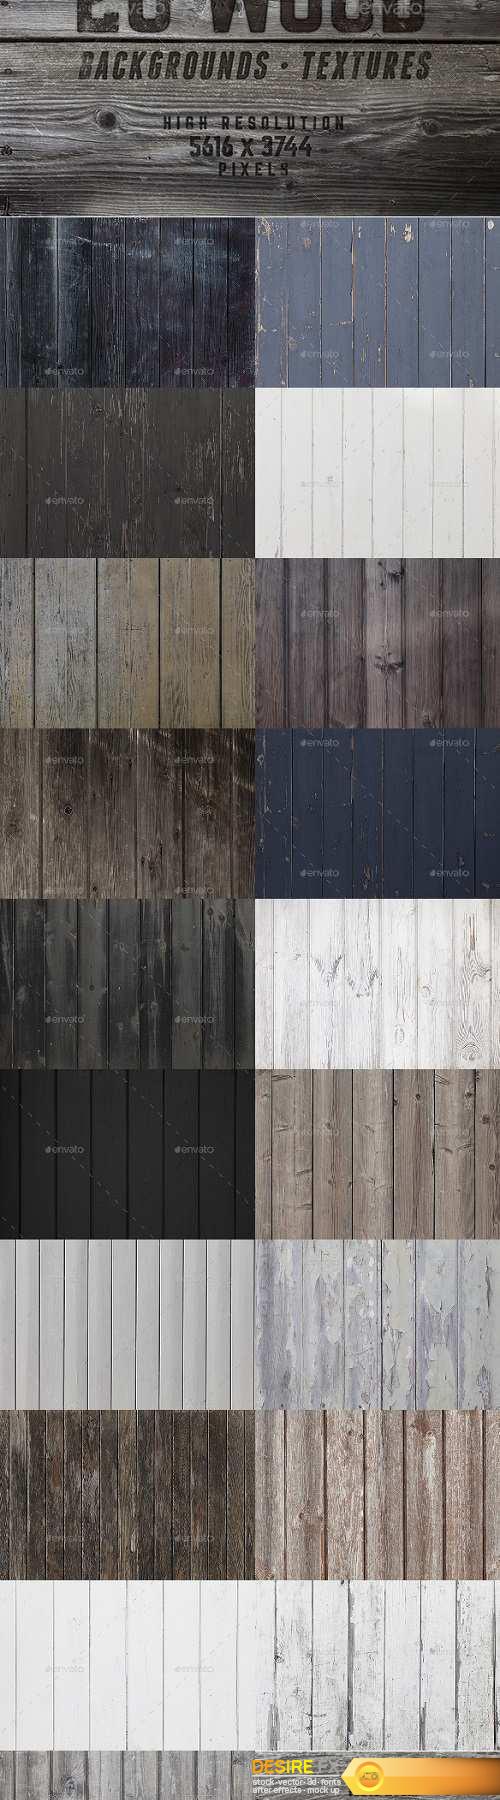 20 Beautiful Wood Backgrounds / Textures 20222804